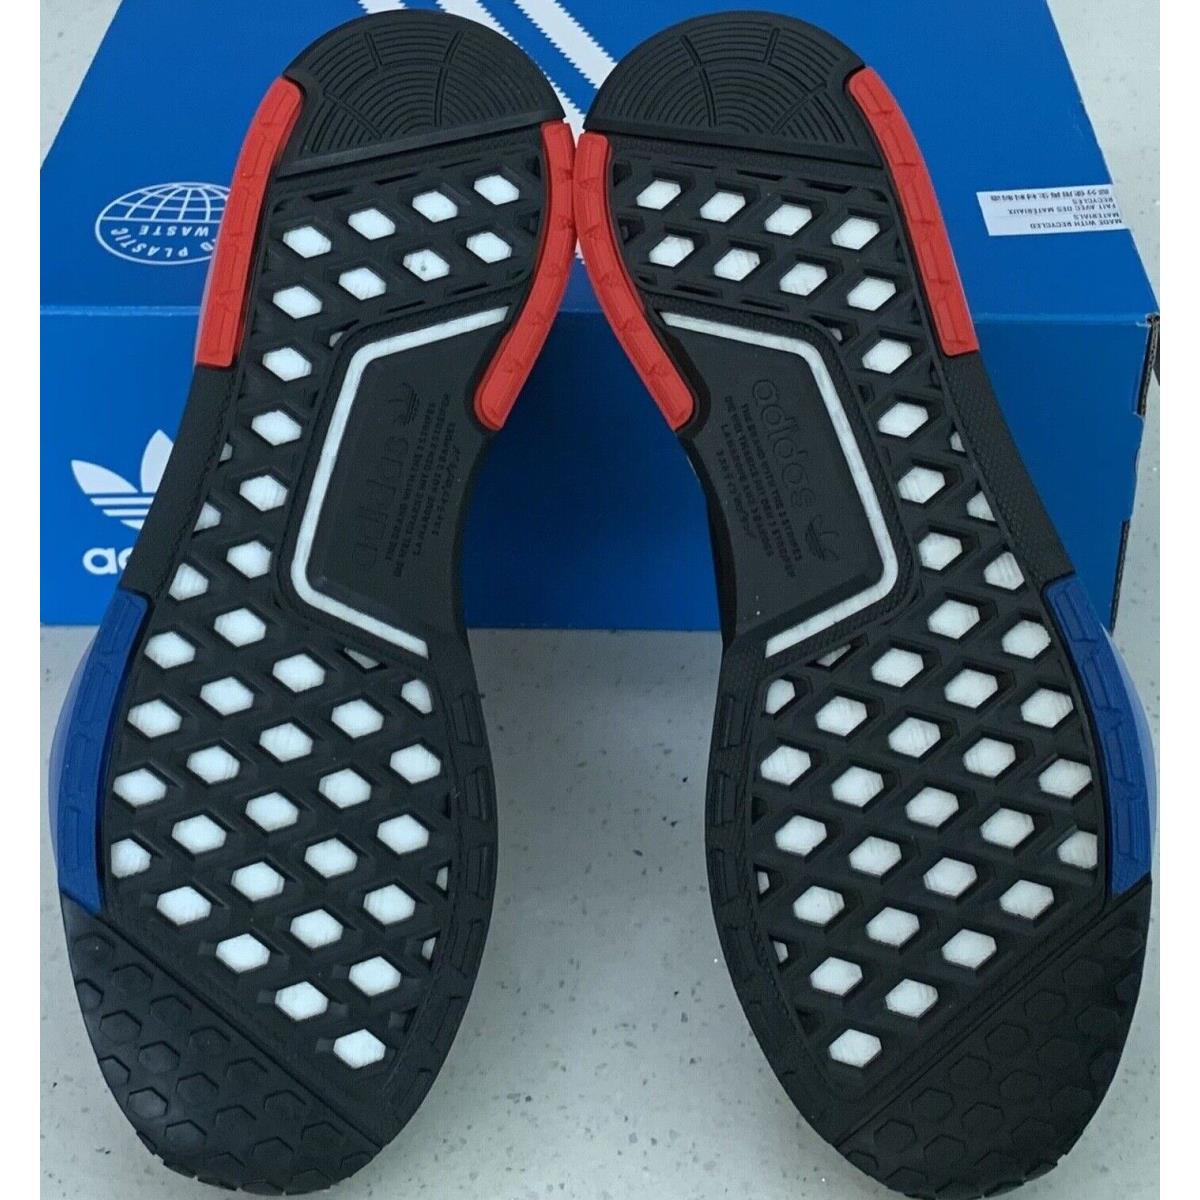 Adidas shoes NMD - Black 3